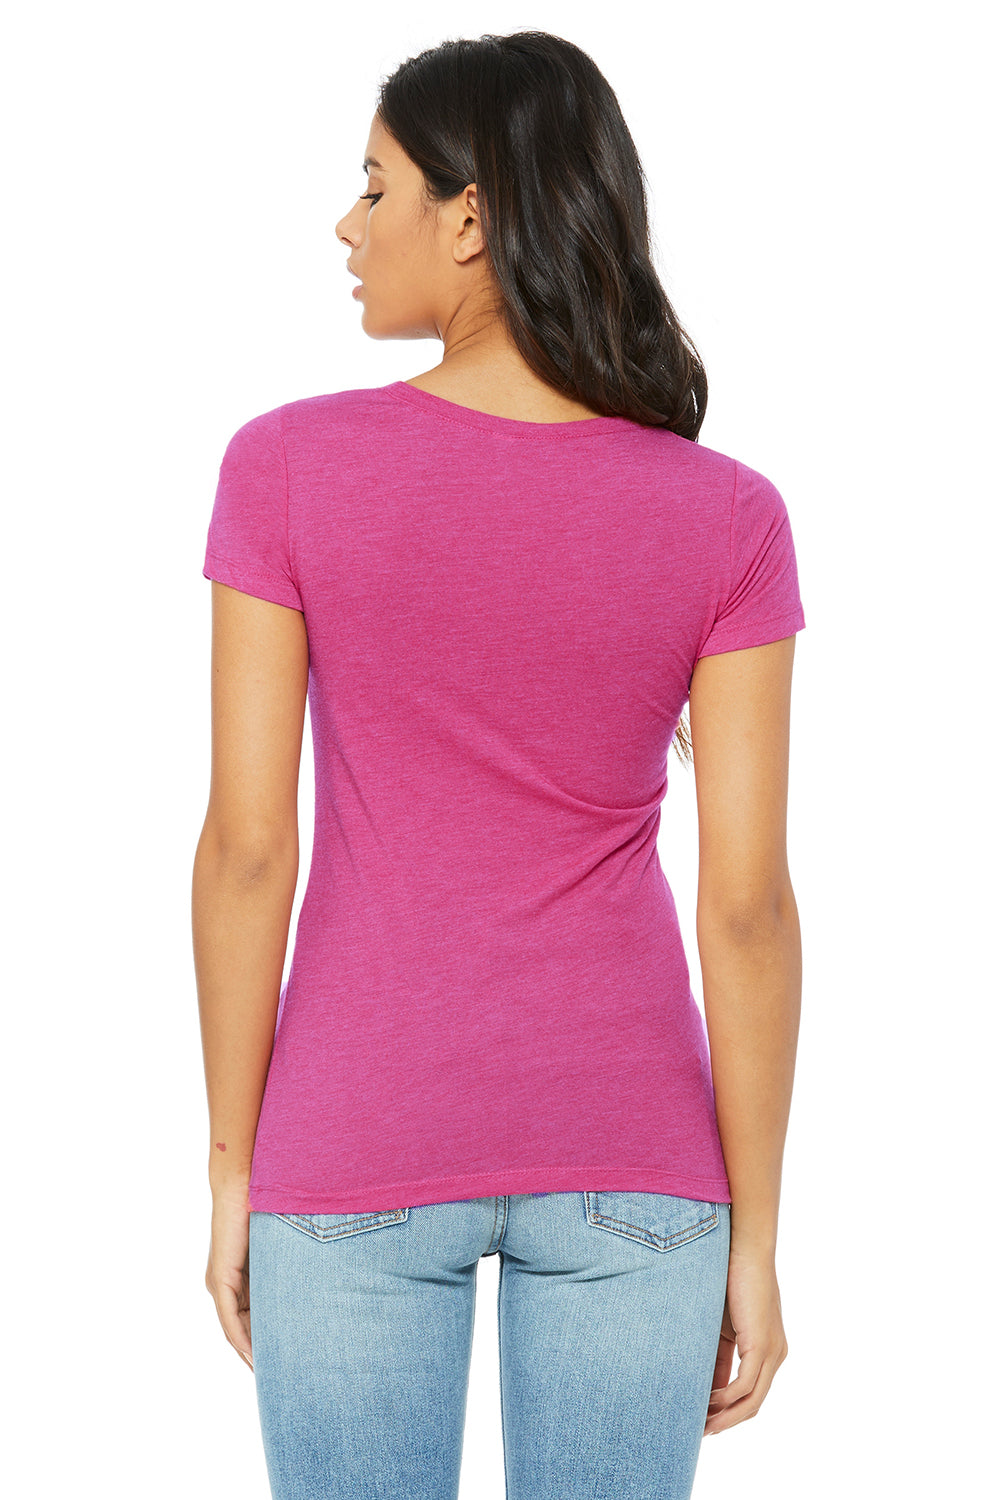 Bella + Canvas B8413 Womens Short Sleeve Crewneck T-Shirt Berry Pink Back